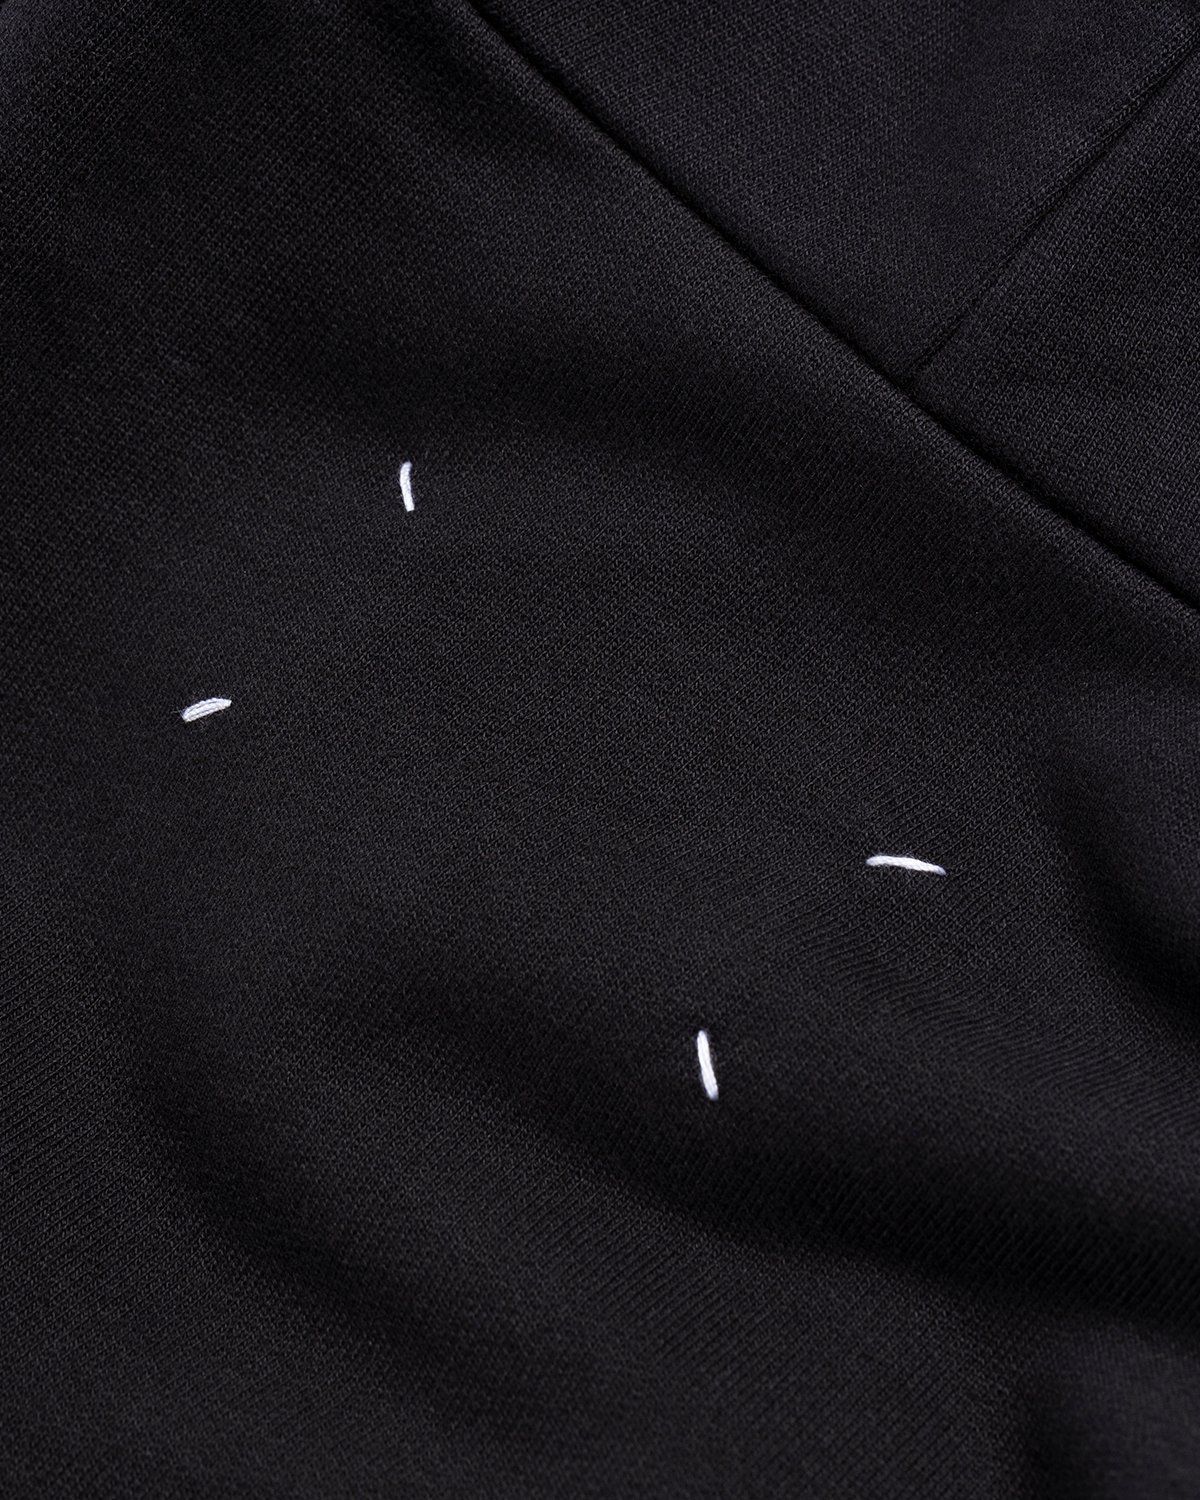 Maison Margiela – Logo Hoodie Black - Sweats - Black - Image 6